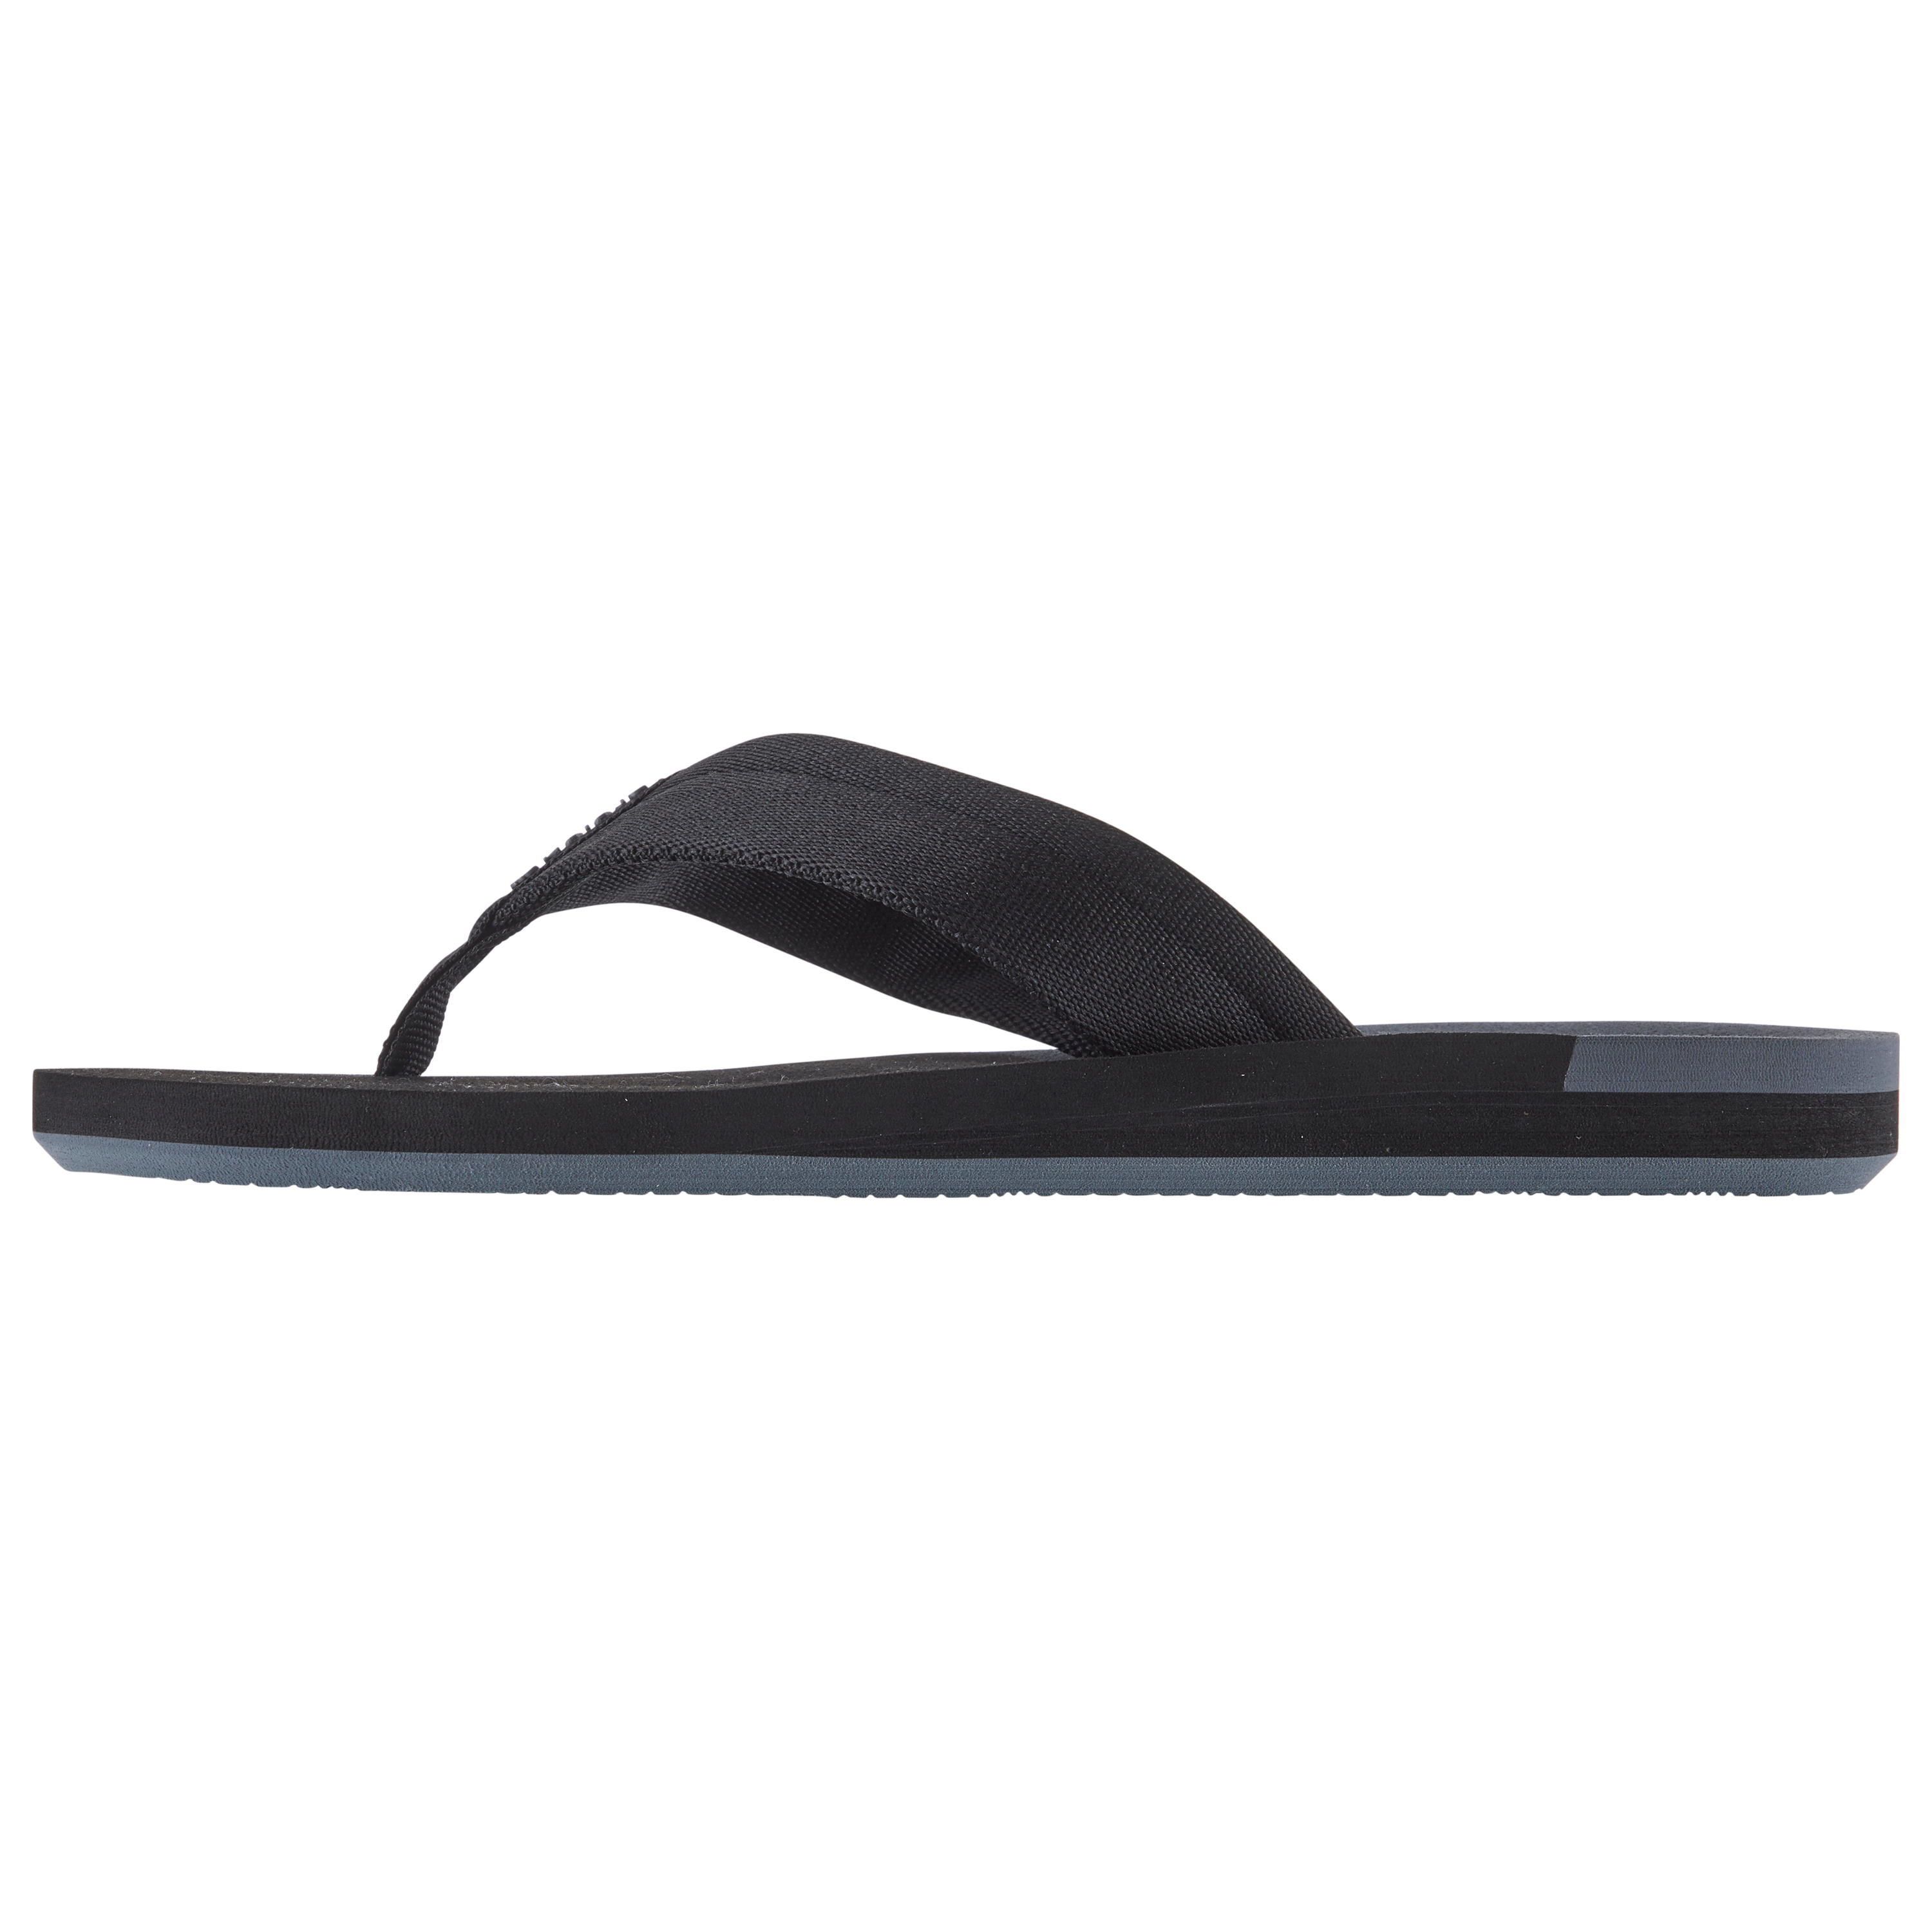 Men's Flip-Flops 520 - New Black 4/6